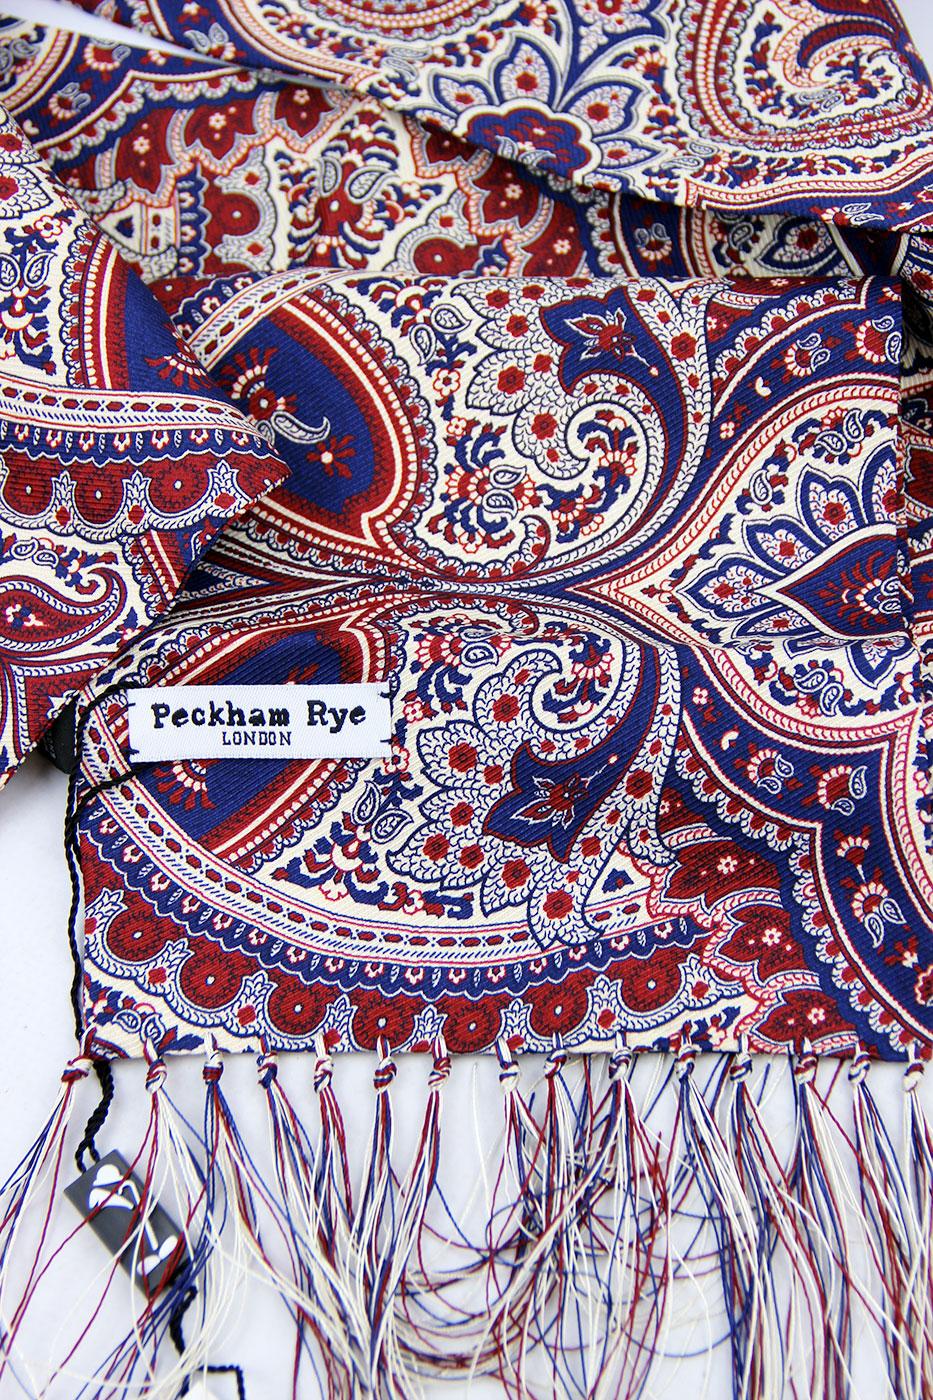 PECKHAM RYE Baroque Paisley Retro Mod Silk Scarf Navy/Cream/Red